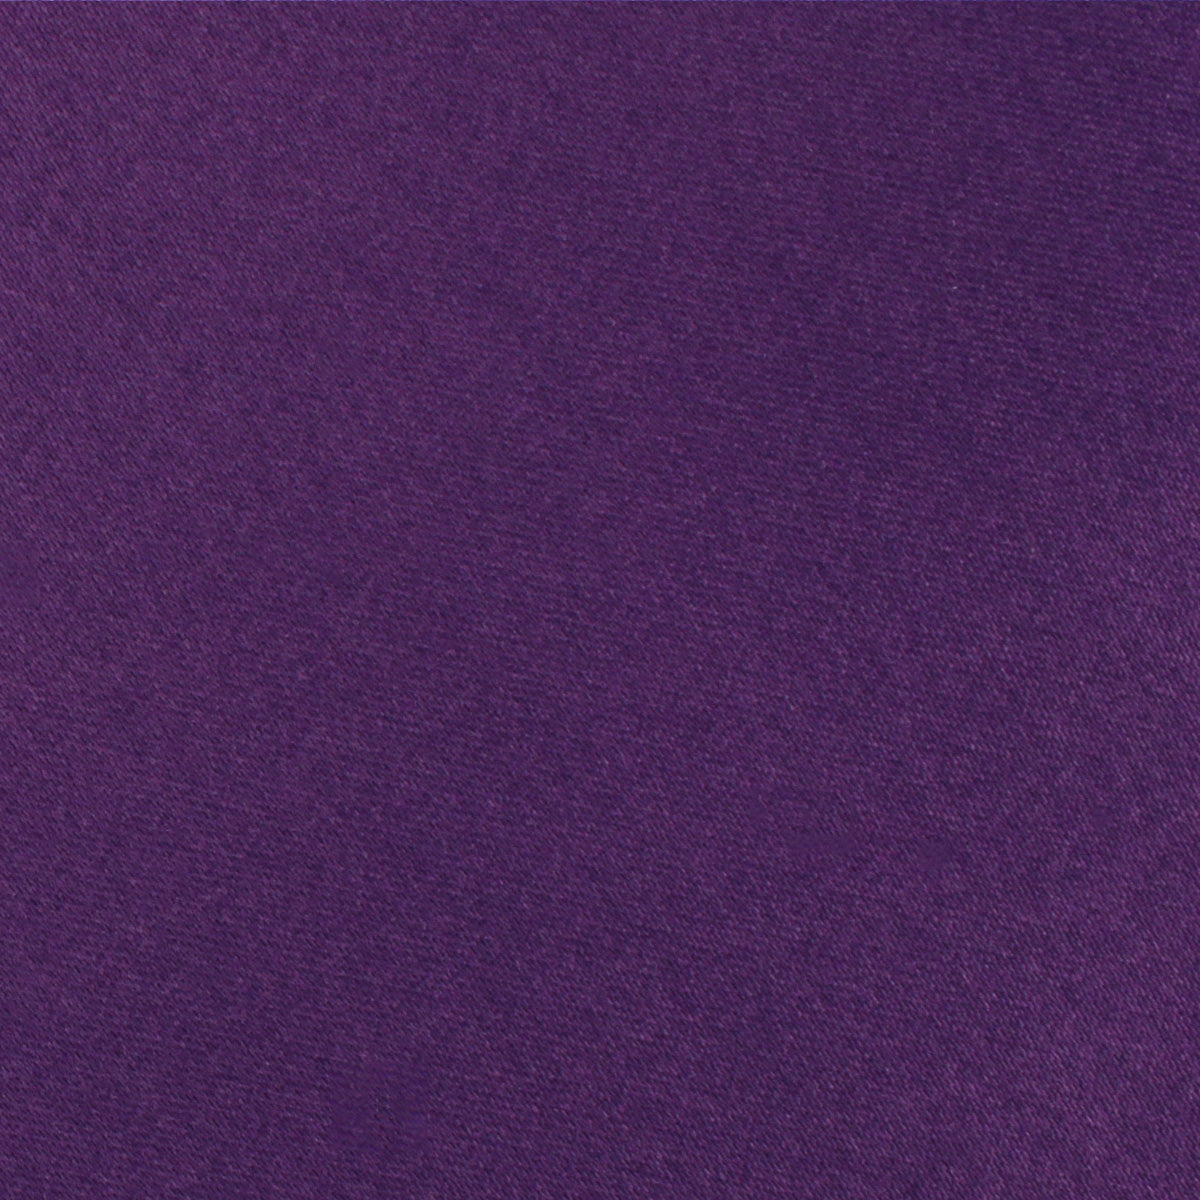 Eggplant Purple Satin Kids Bow Tie Fabric